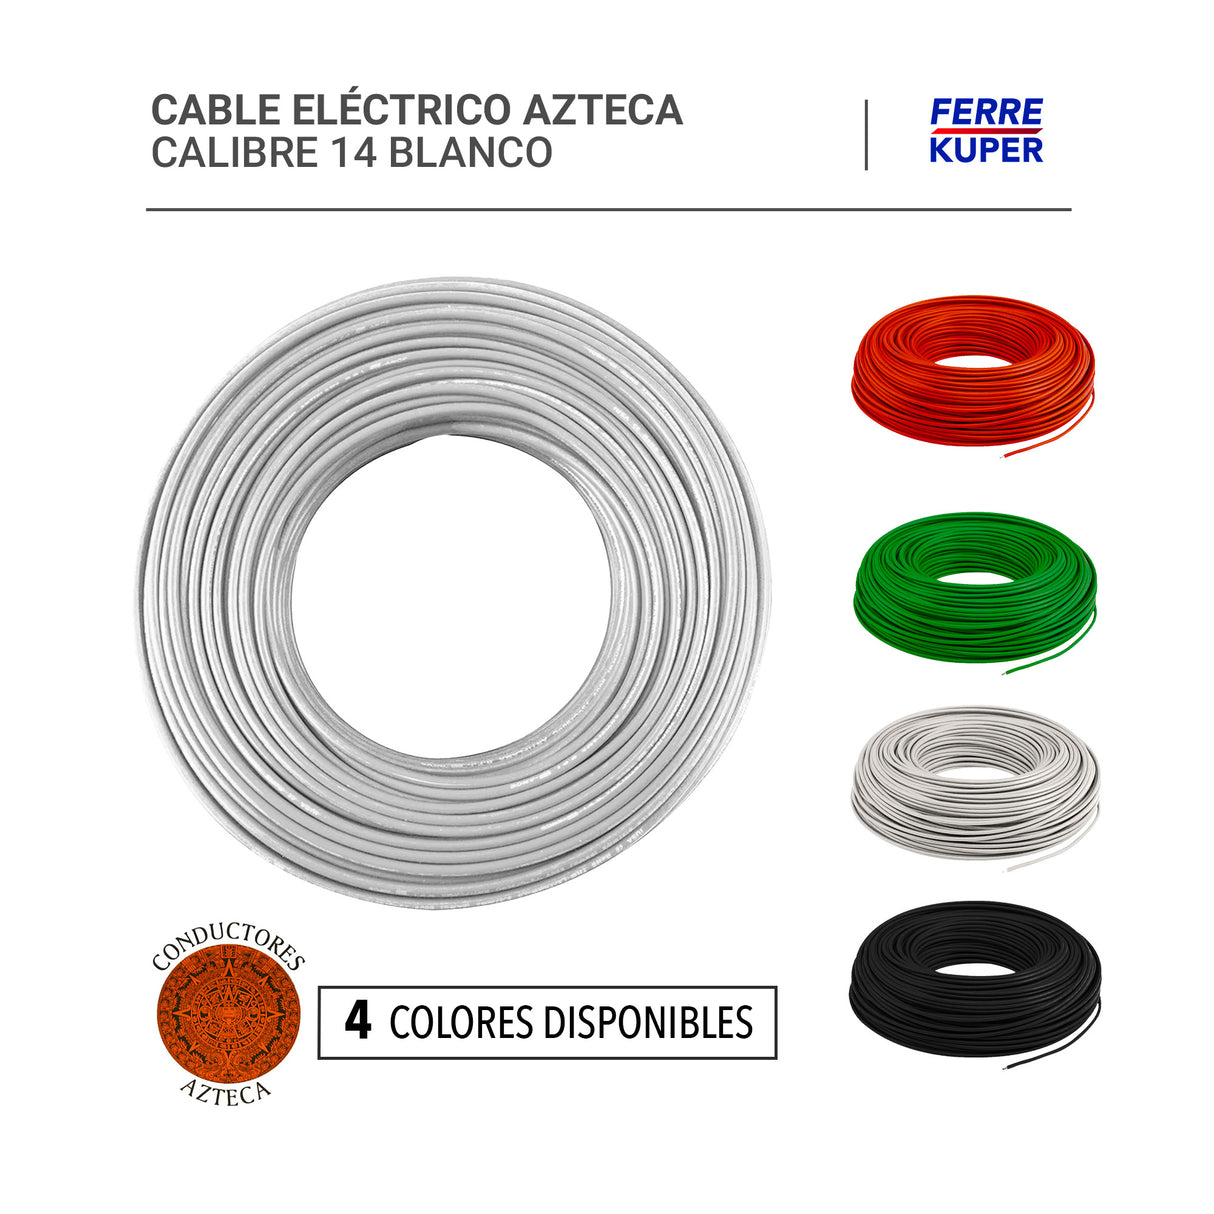 Cable Eléctrico Azteca Calibre 14